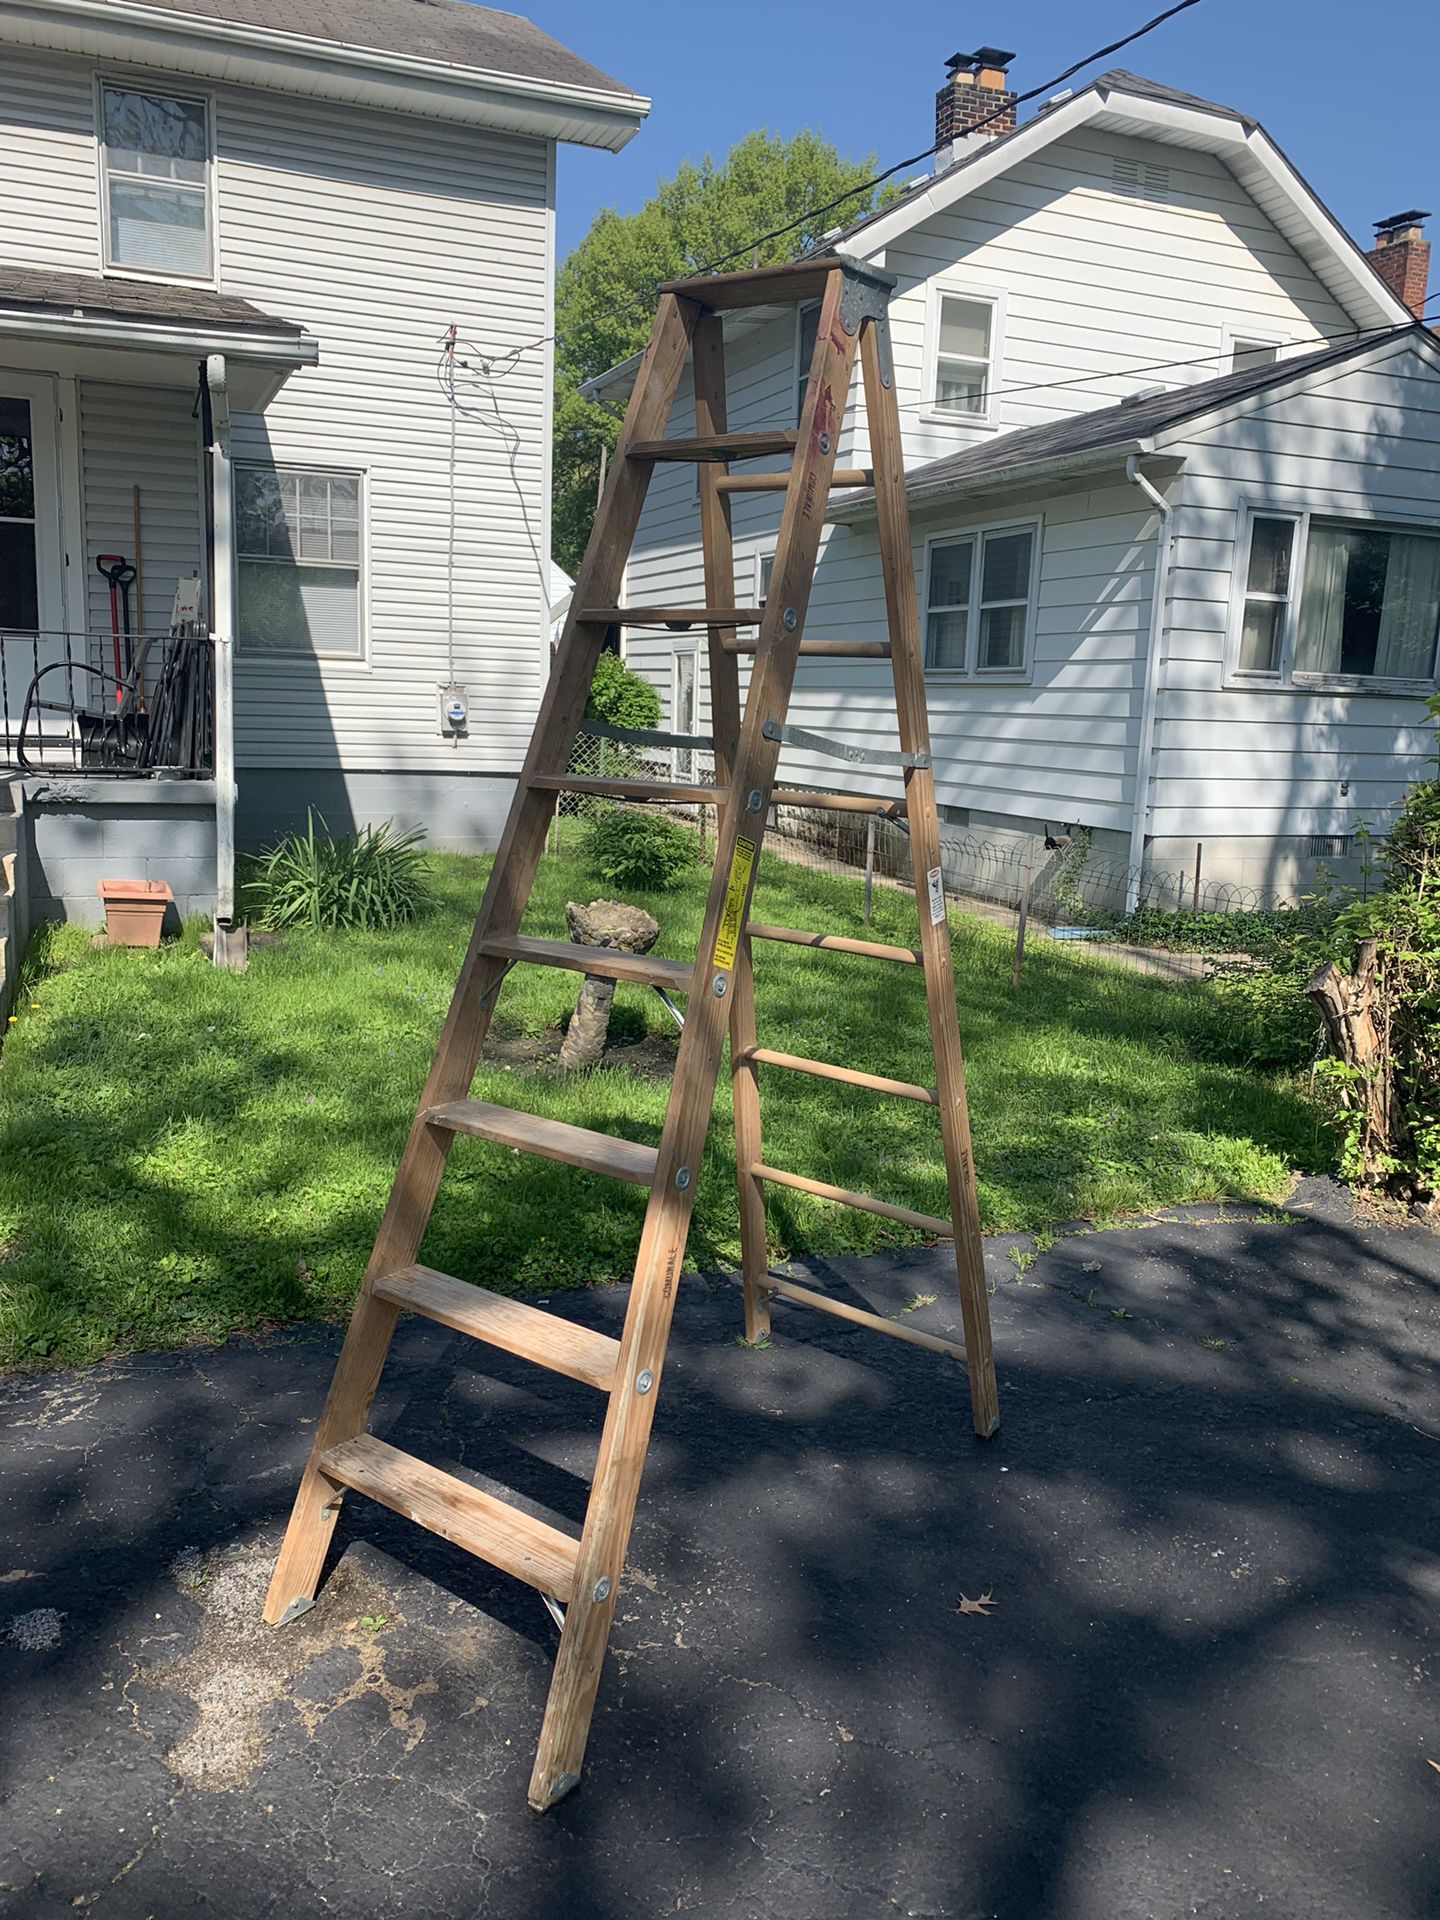 Nice ladder